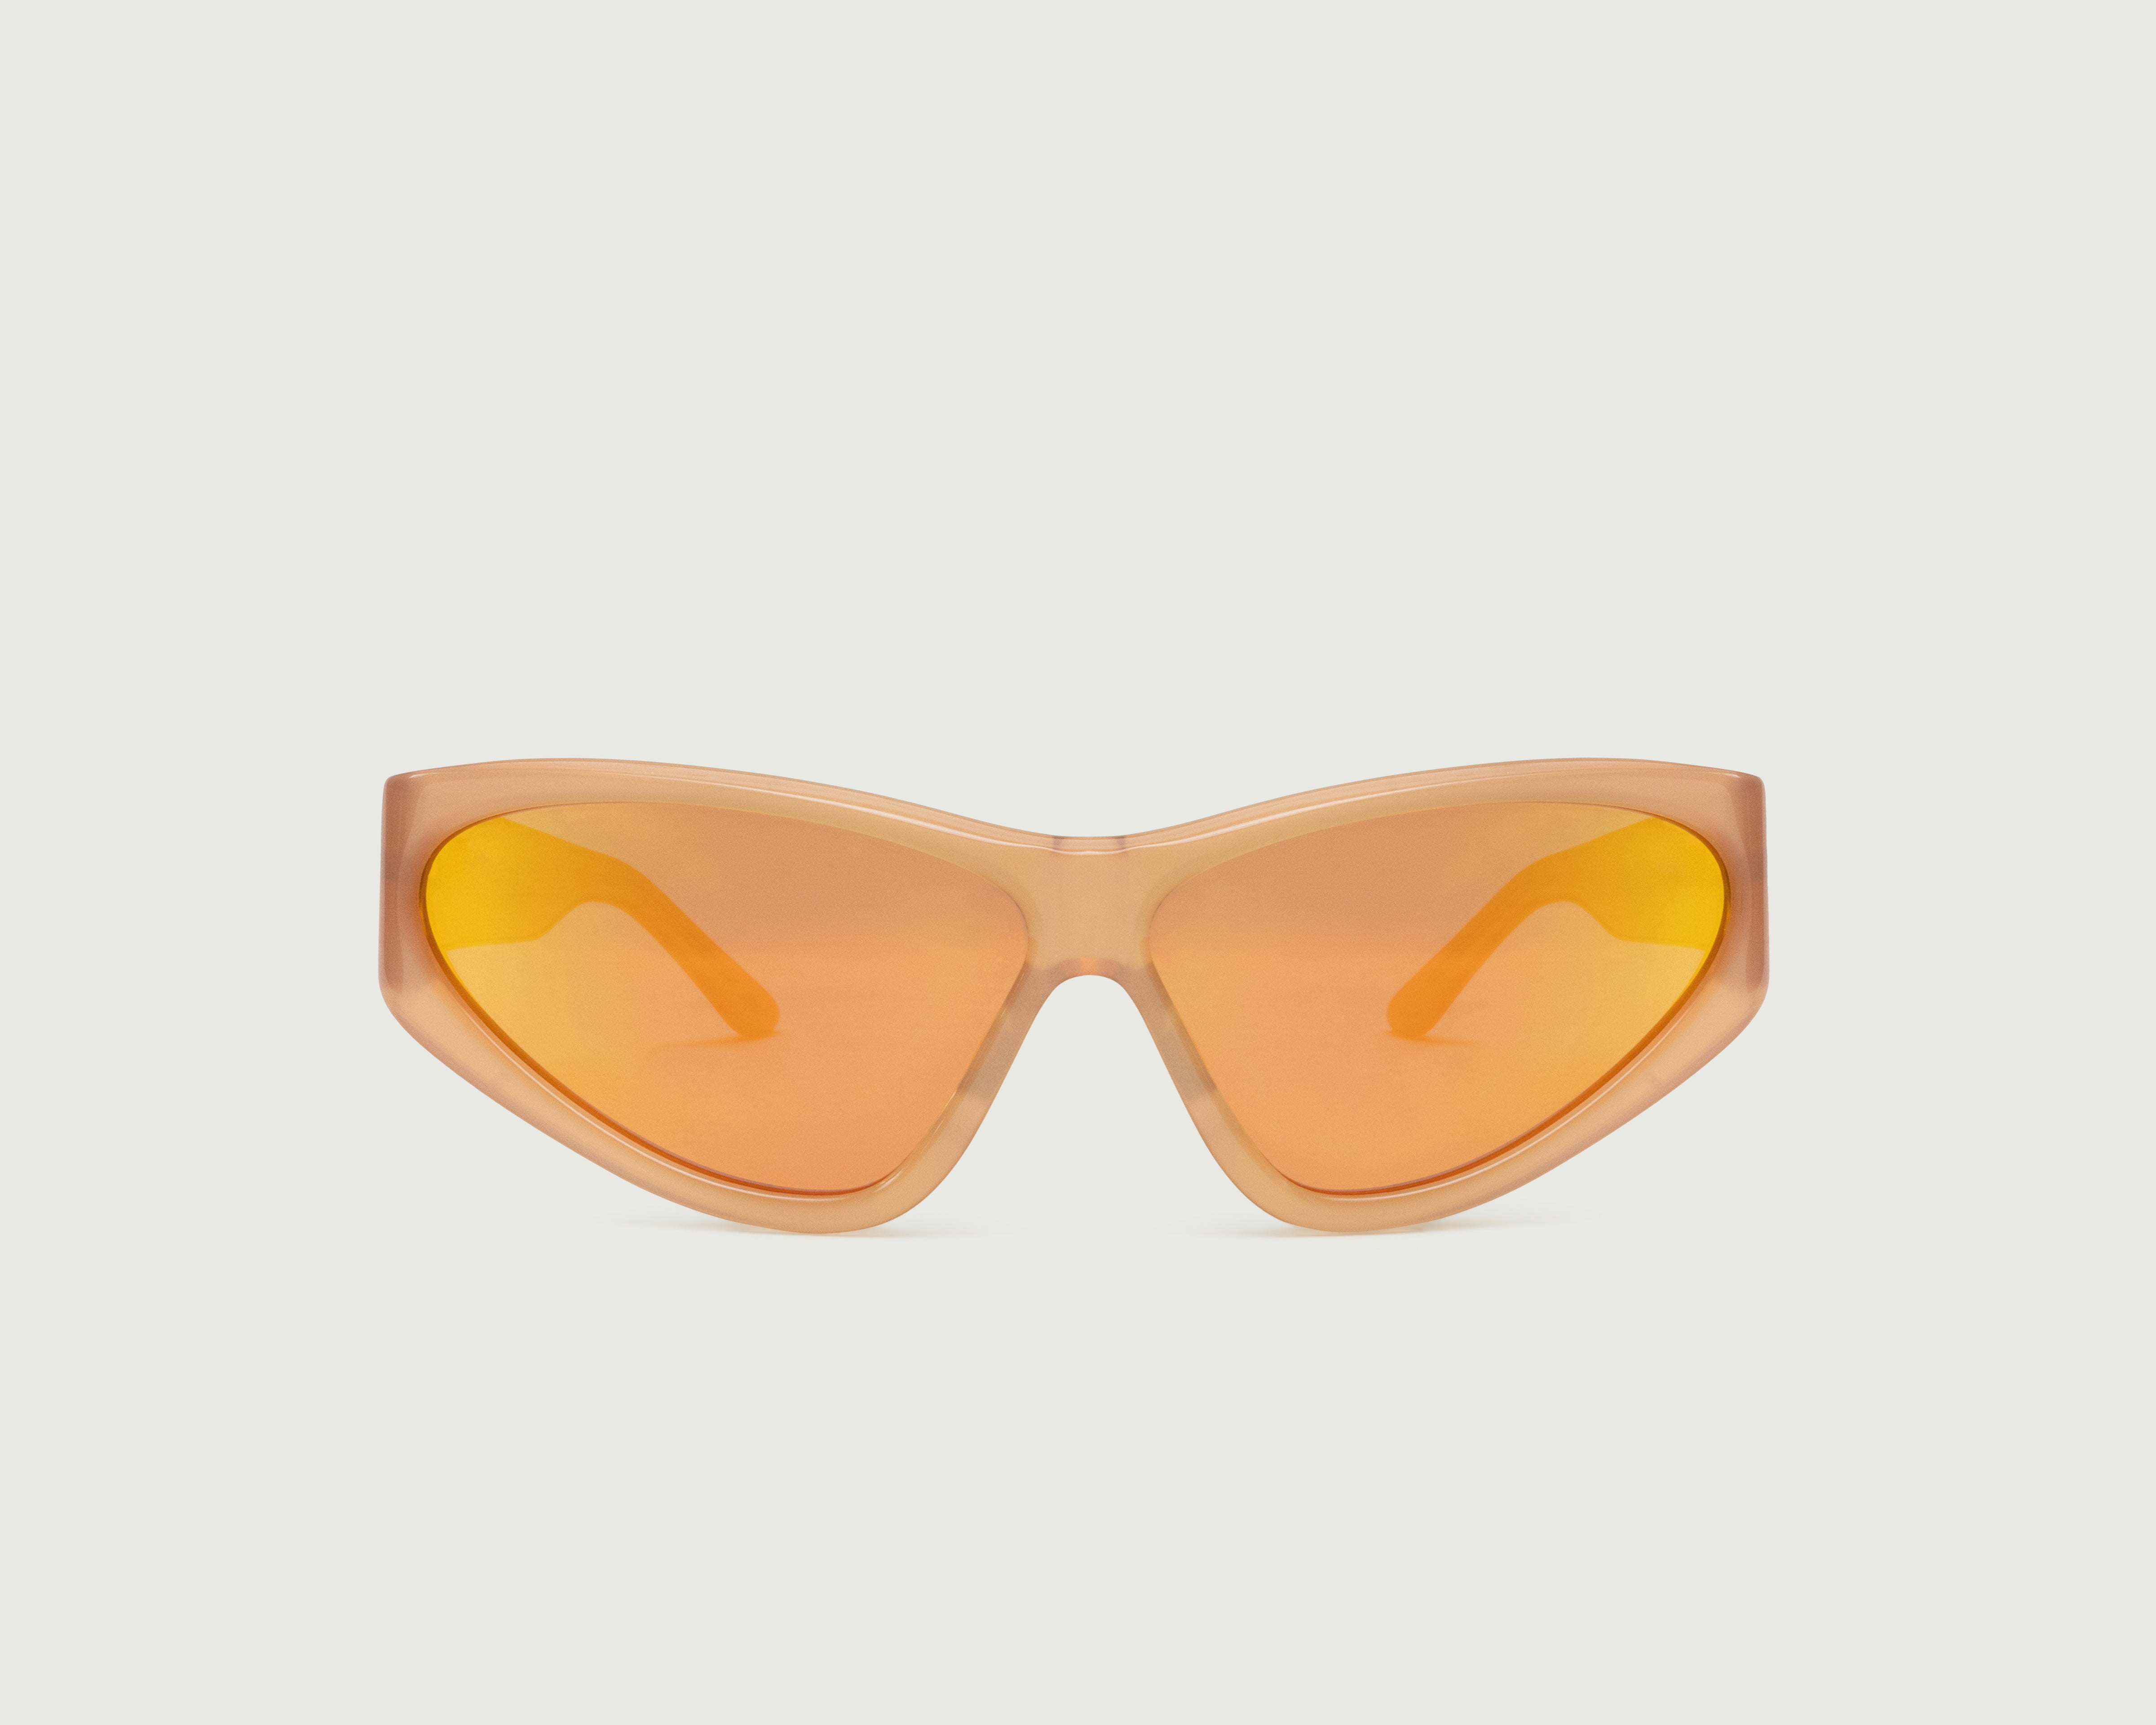 Dune::Zoe Sunglasses cateye orange acetate front